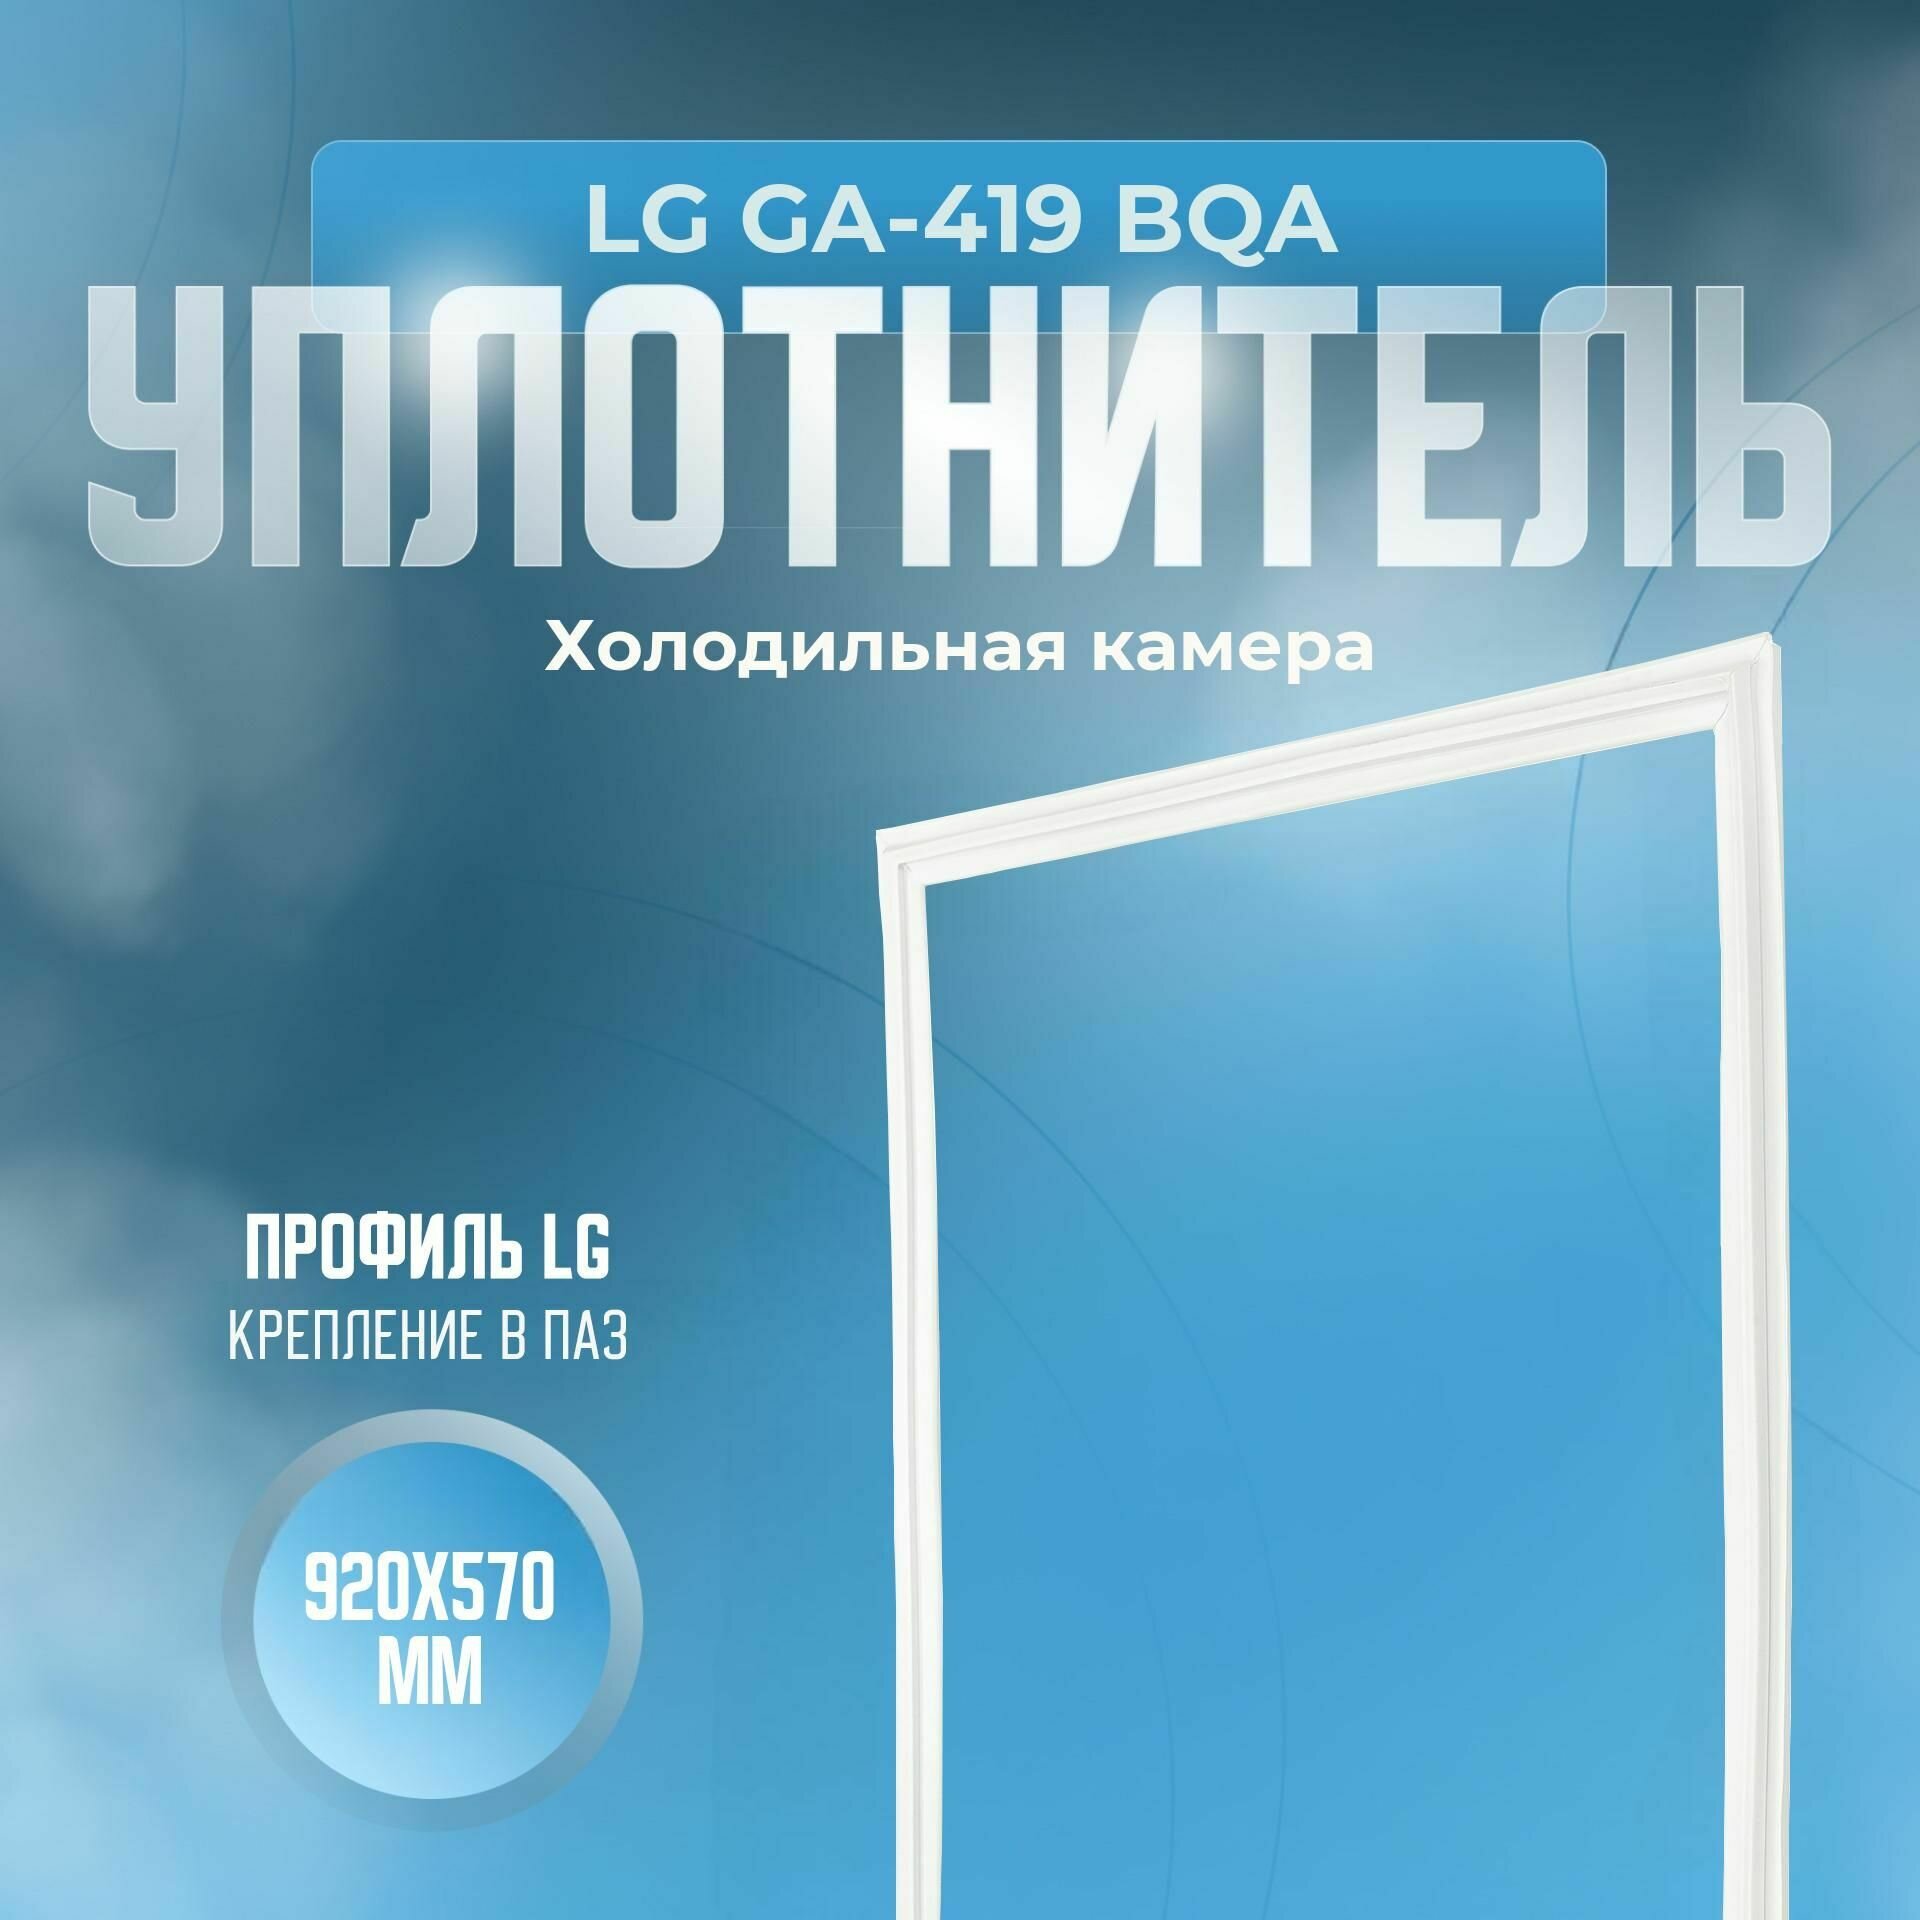 Уплотнитель LG GA-419 BQA. х. к, Размер - 920х570 мм. LG